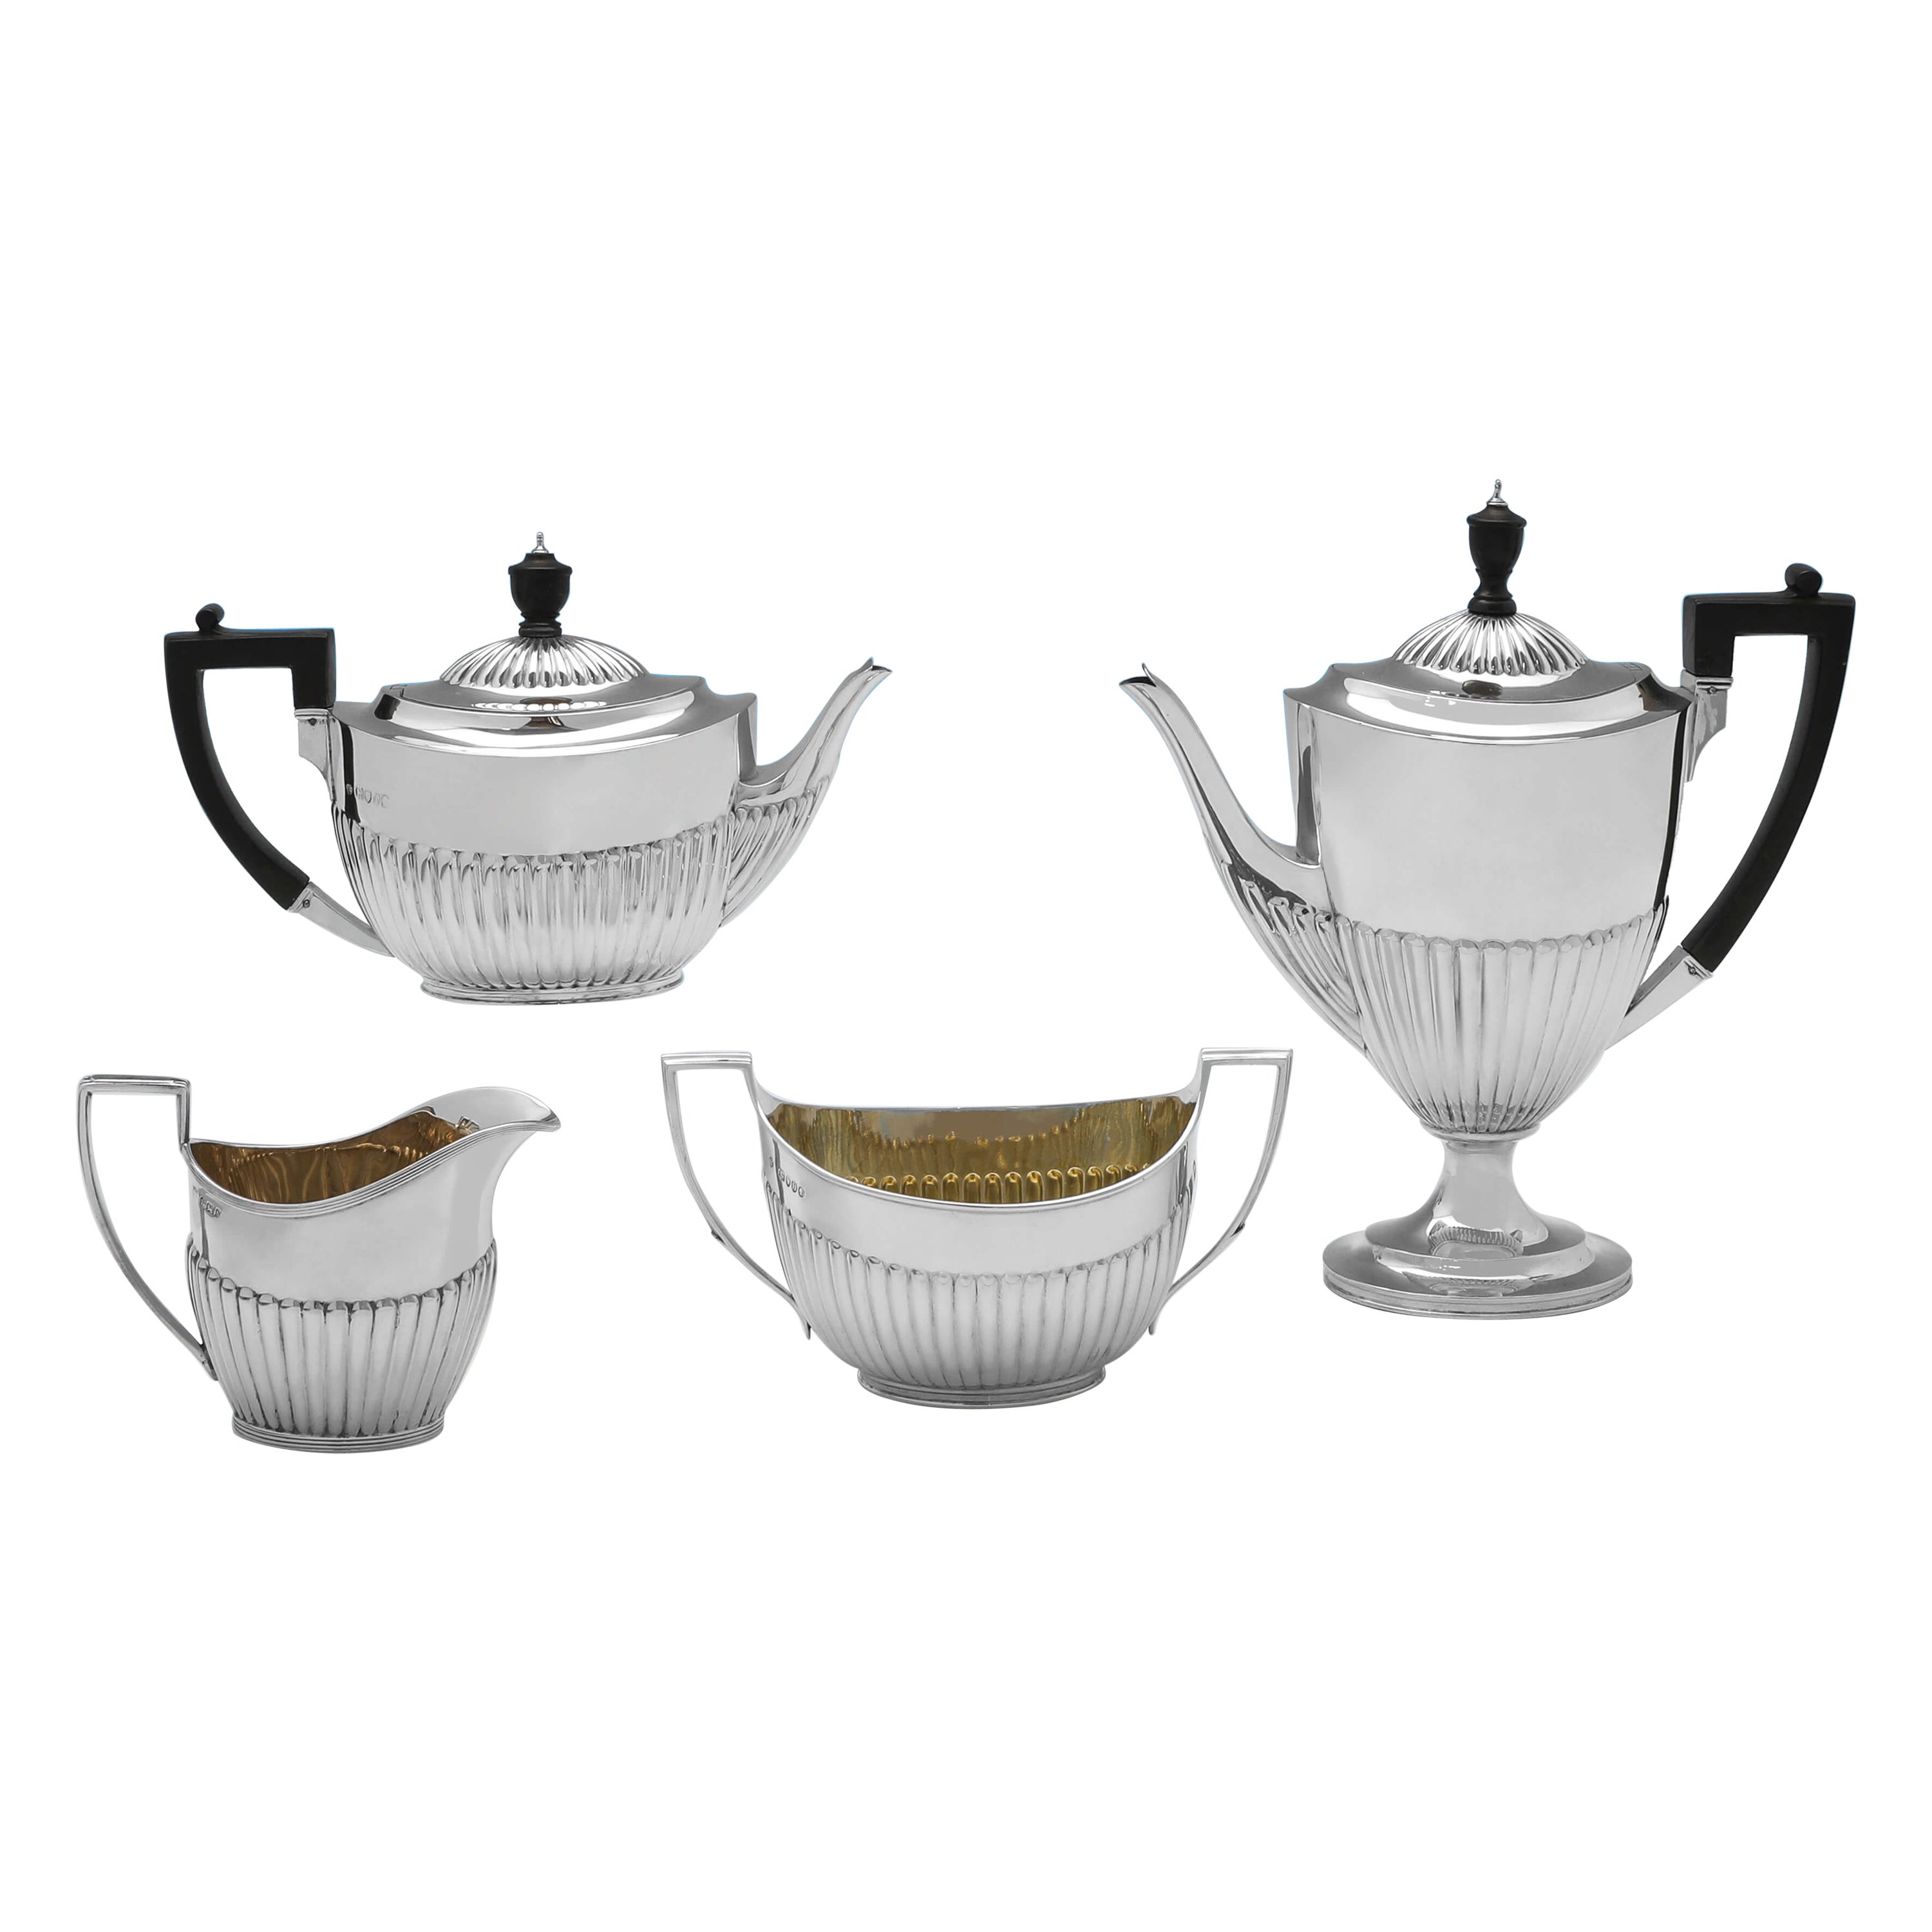 Victorian Sterling Silver Tea Set - 4 Piece - Queen Anne Design - Barnards 1883